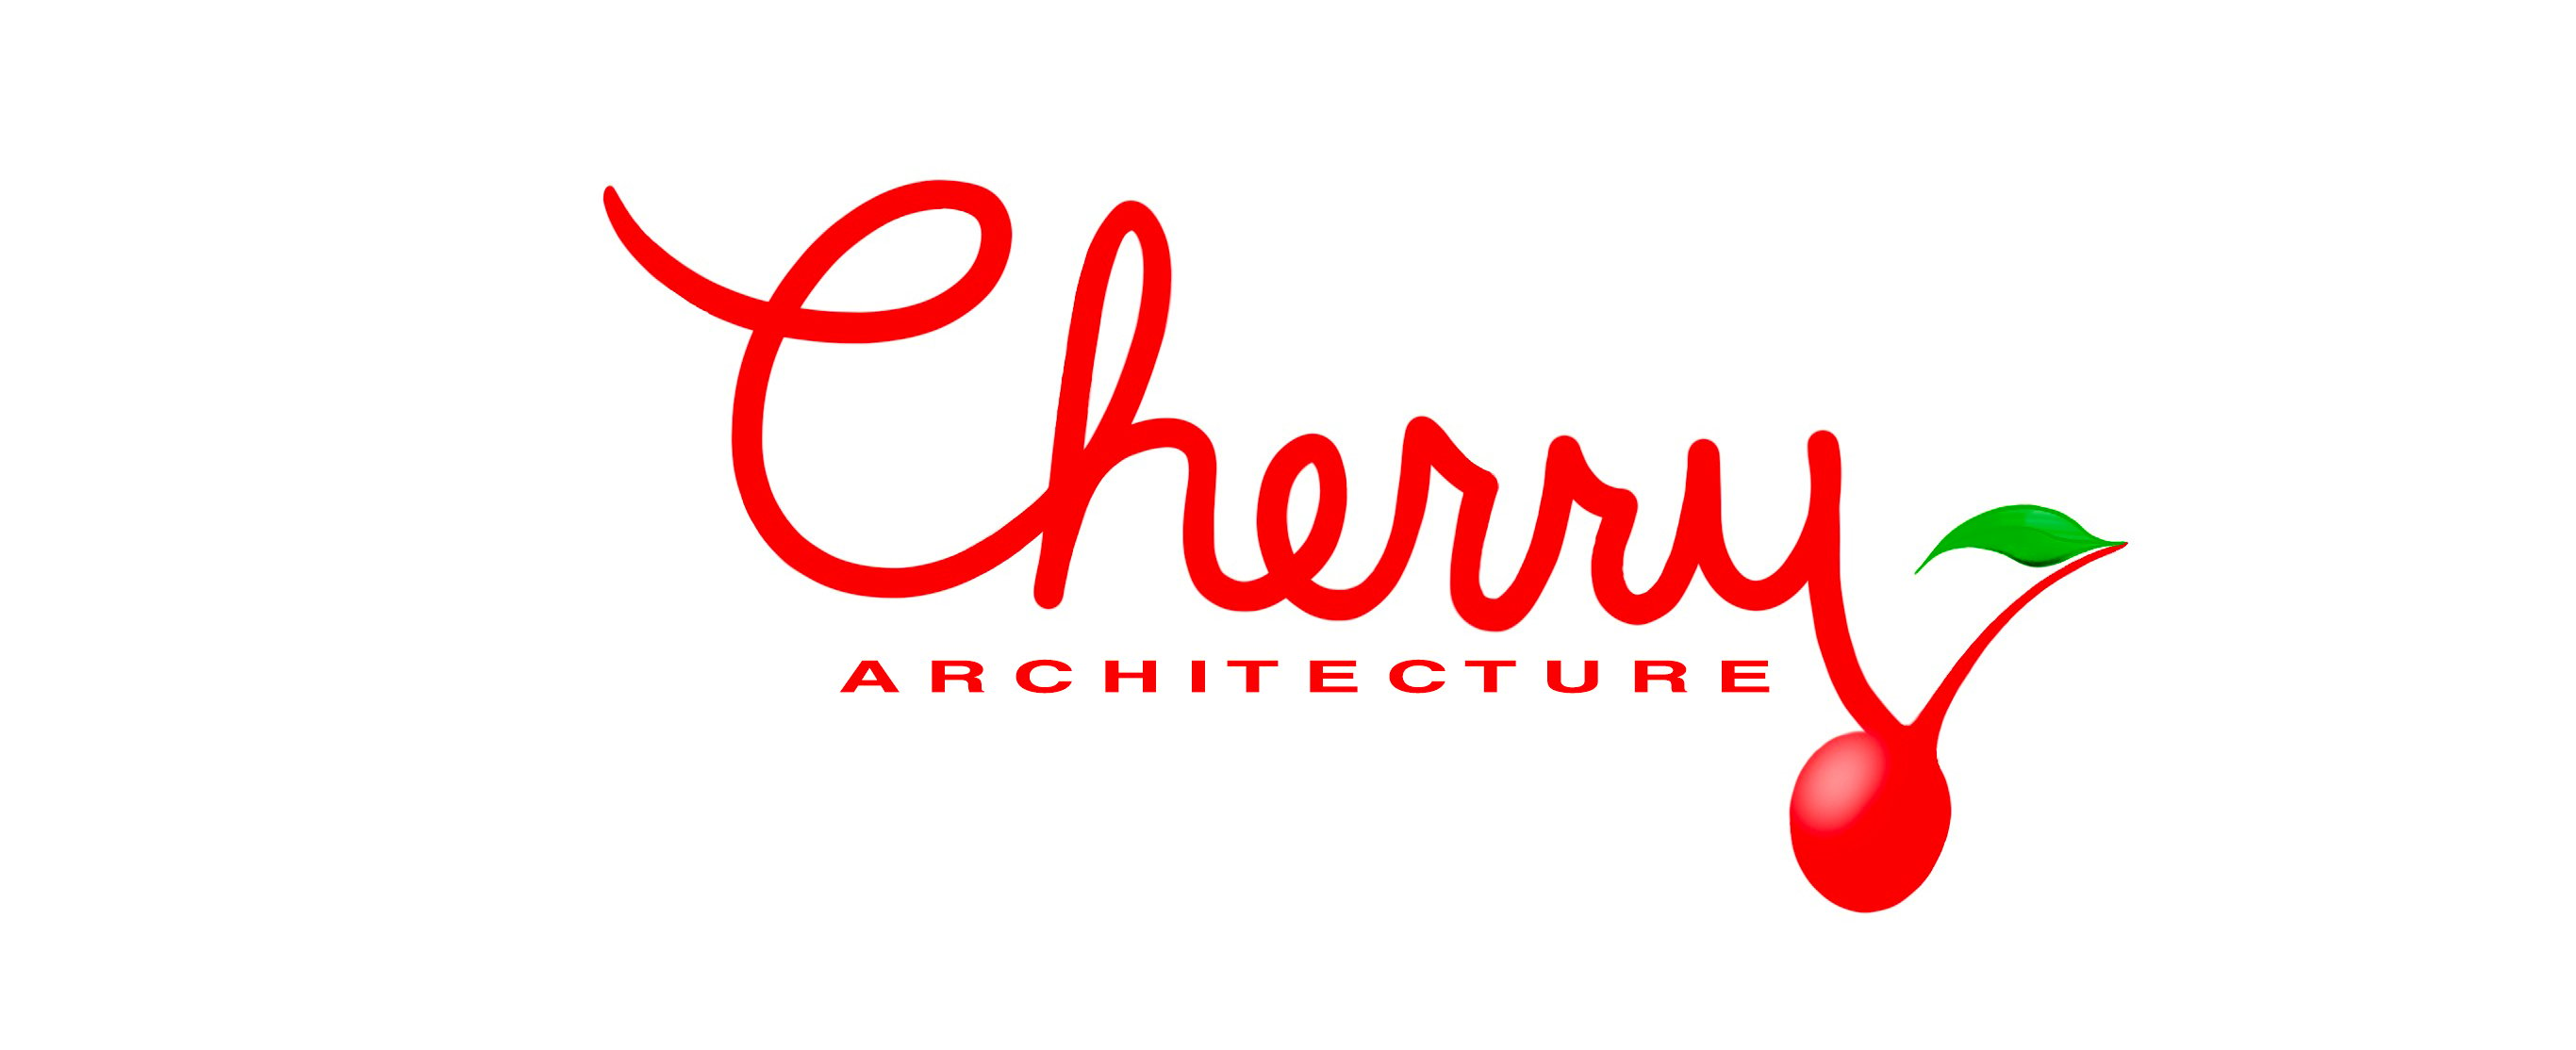 Cherry Architecture Logo